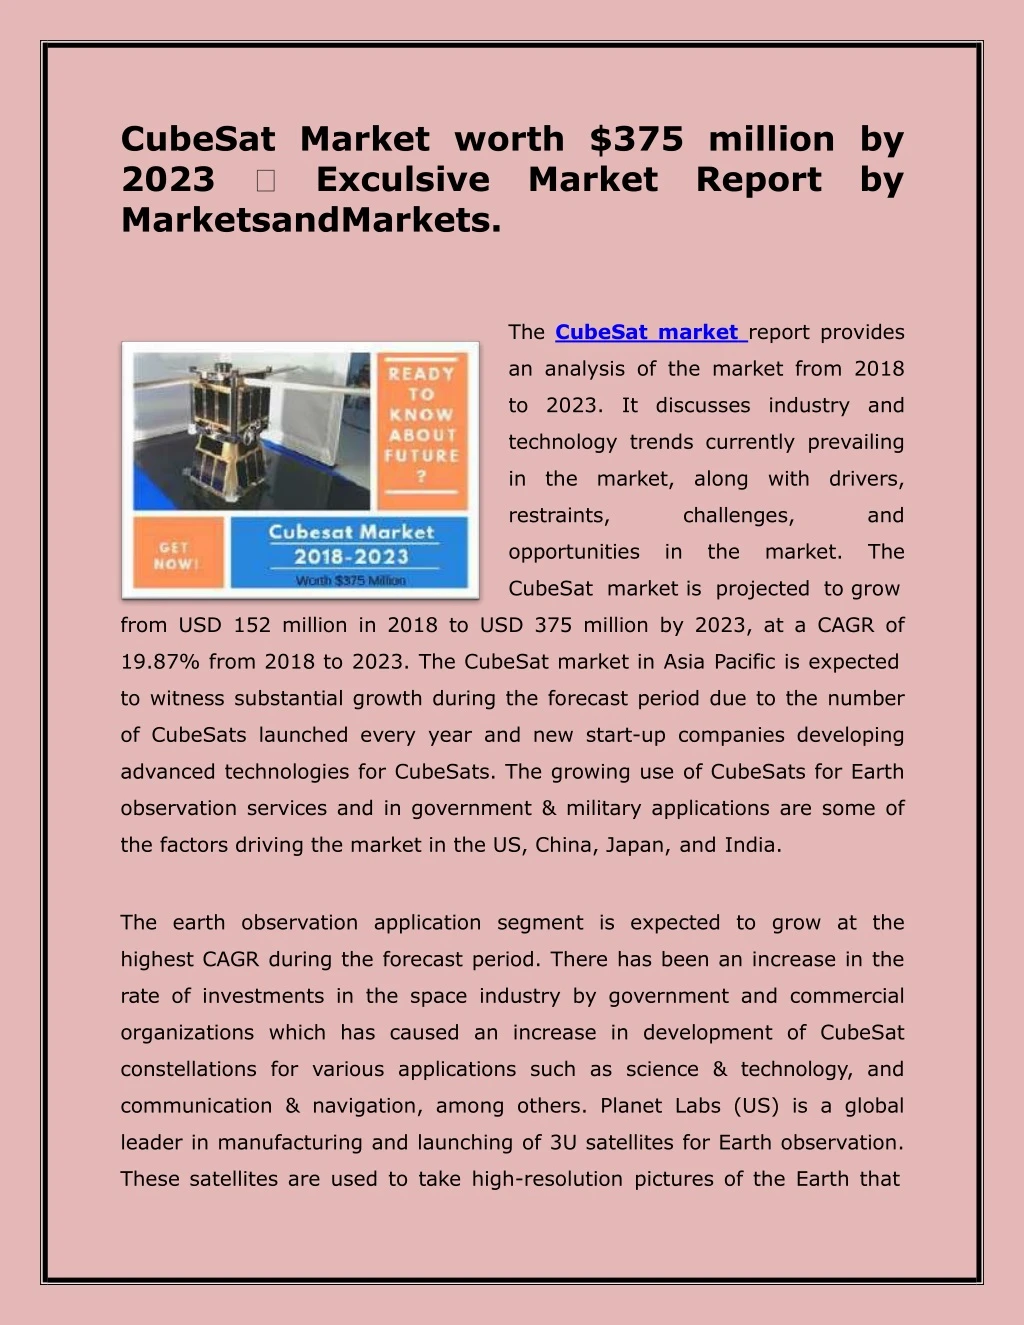 cubesat market worth 375 million by 2023